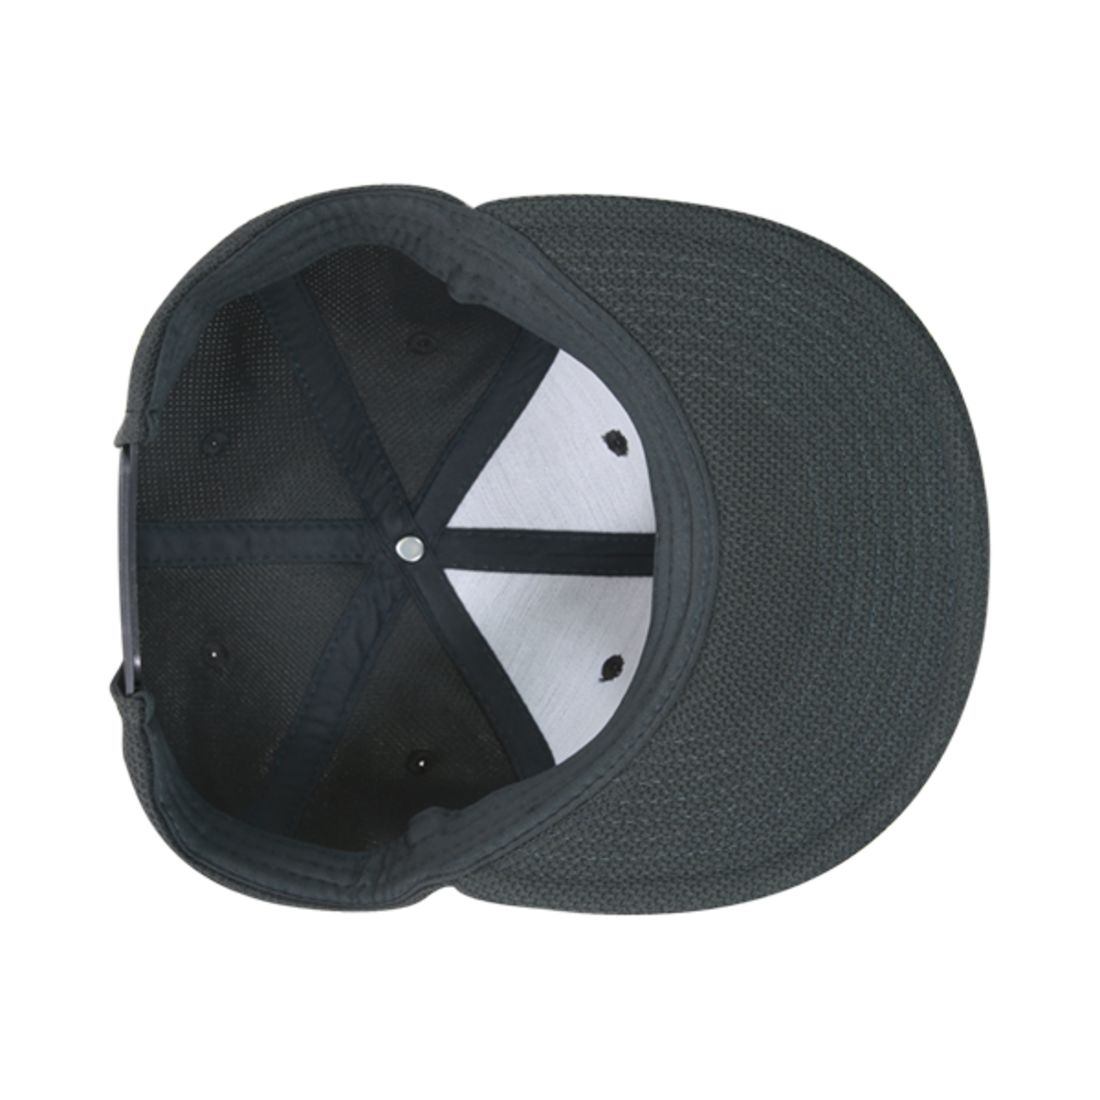 Decky 6103 Pique Pattern Snapback Hats Golf Sports Caps 6 Panel Flat Bill Wholesale